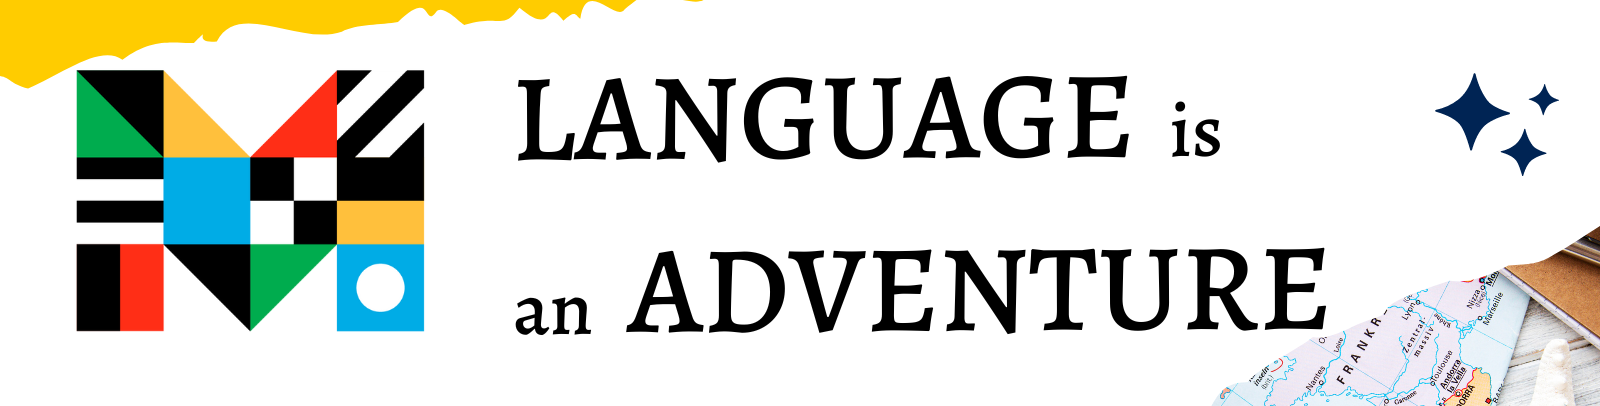 Mango languages logo next to the text 